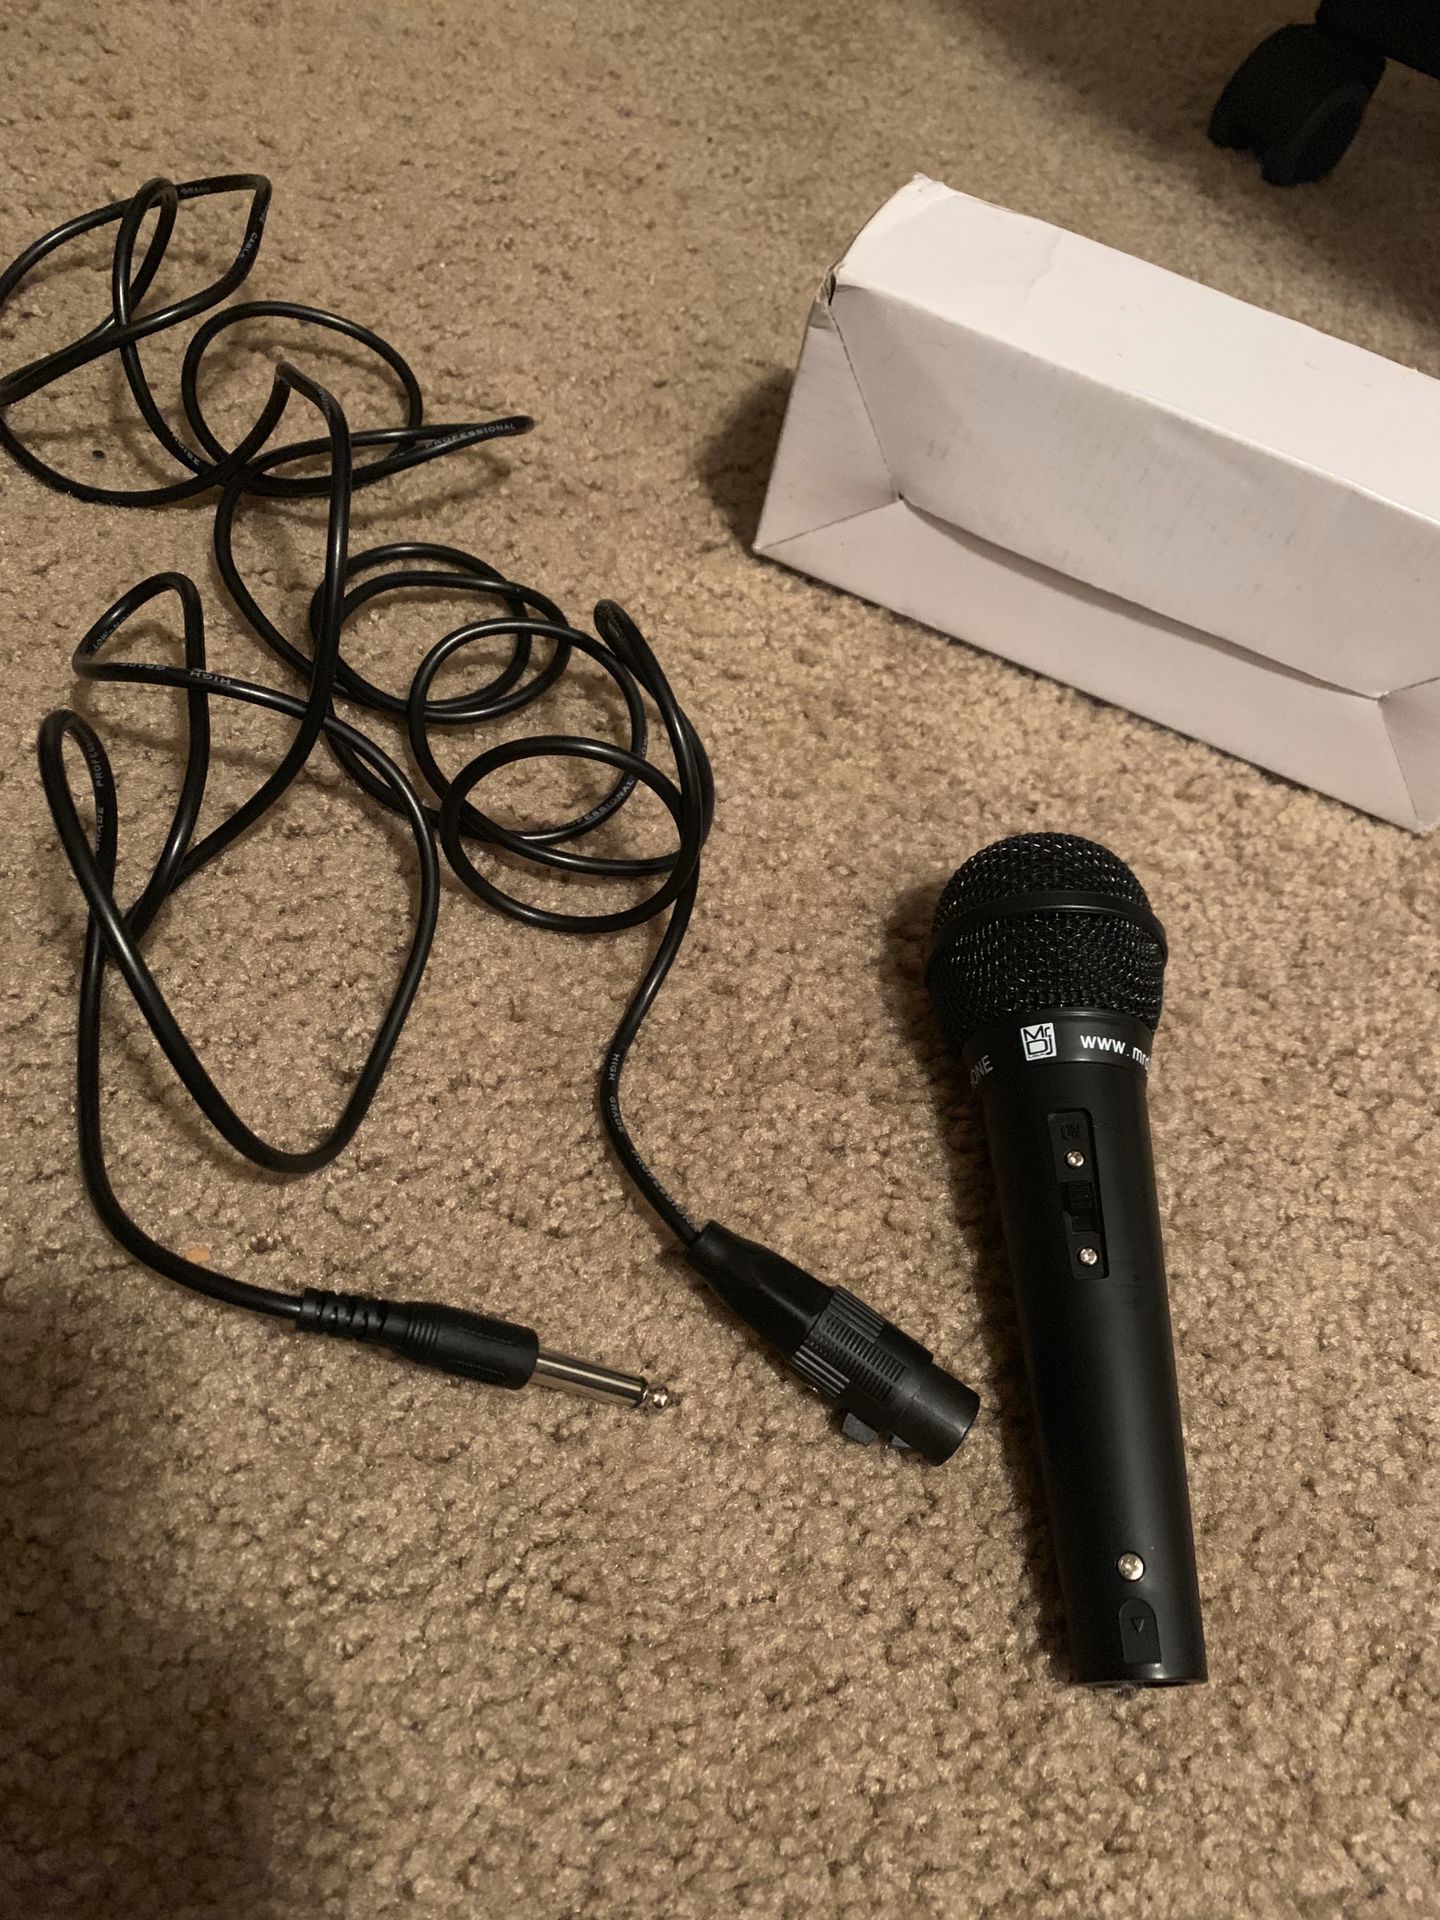 New microphone